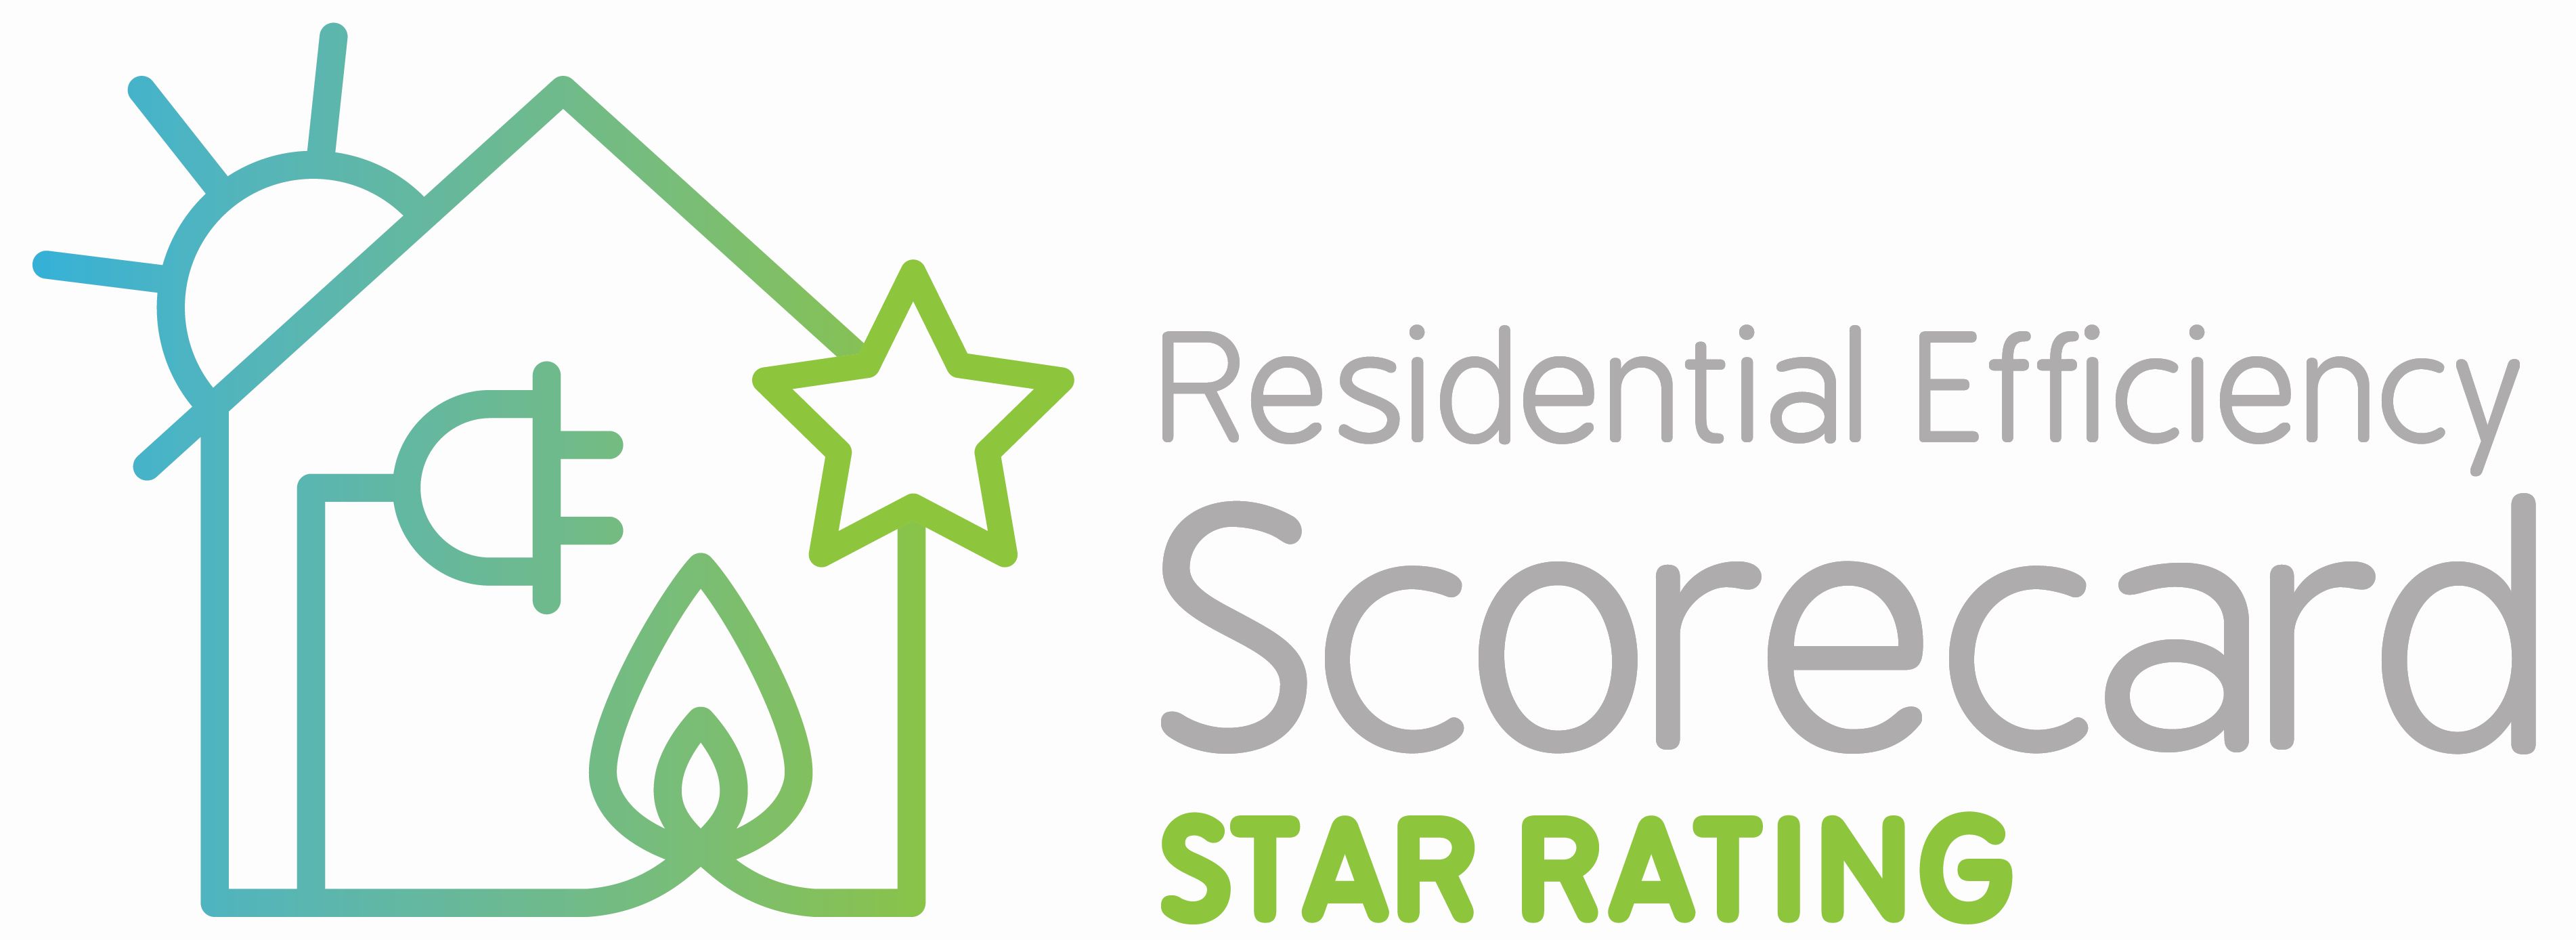 Residential Efficiency Scorecard - Logo.JPG